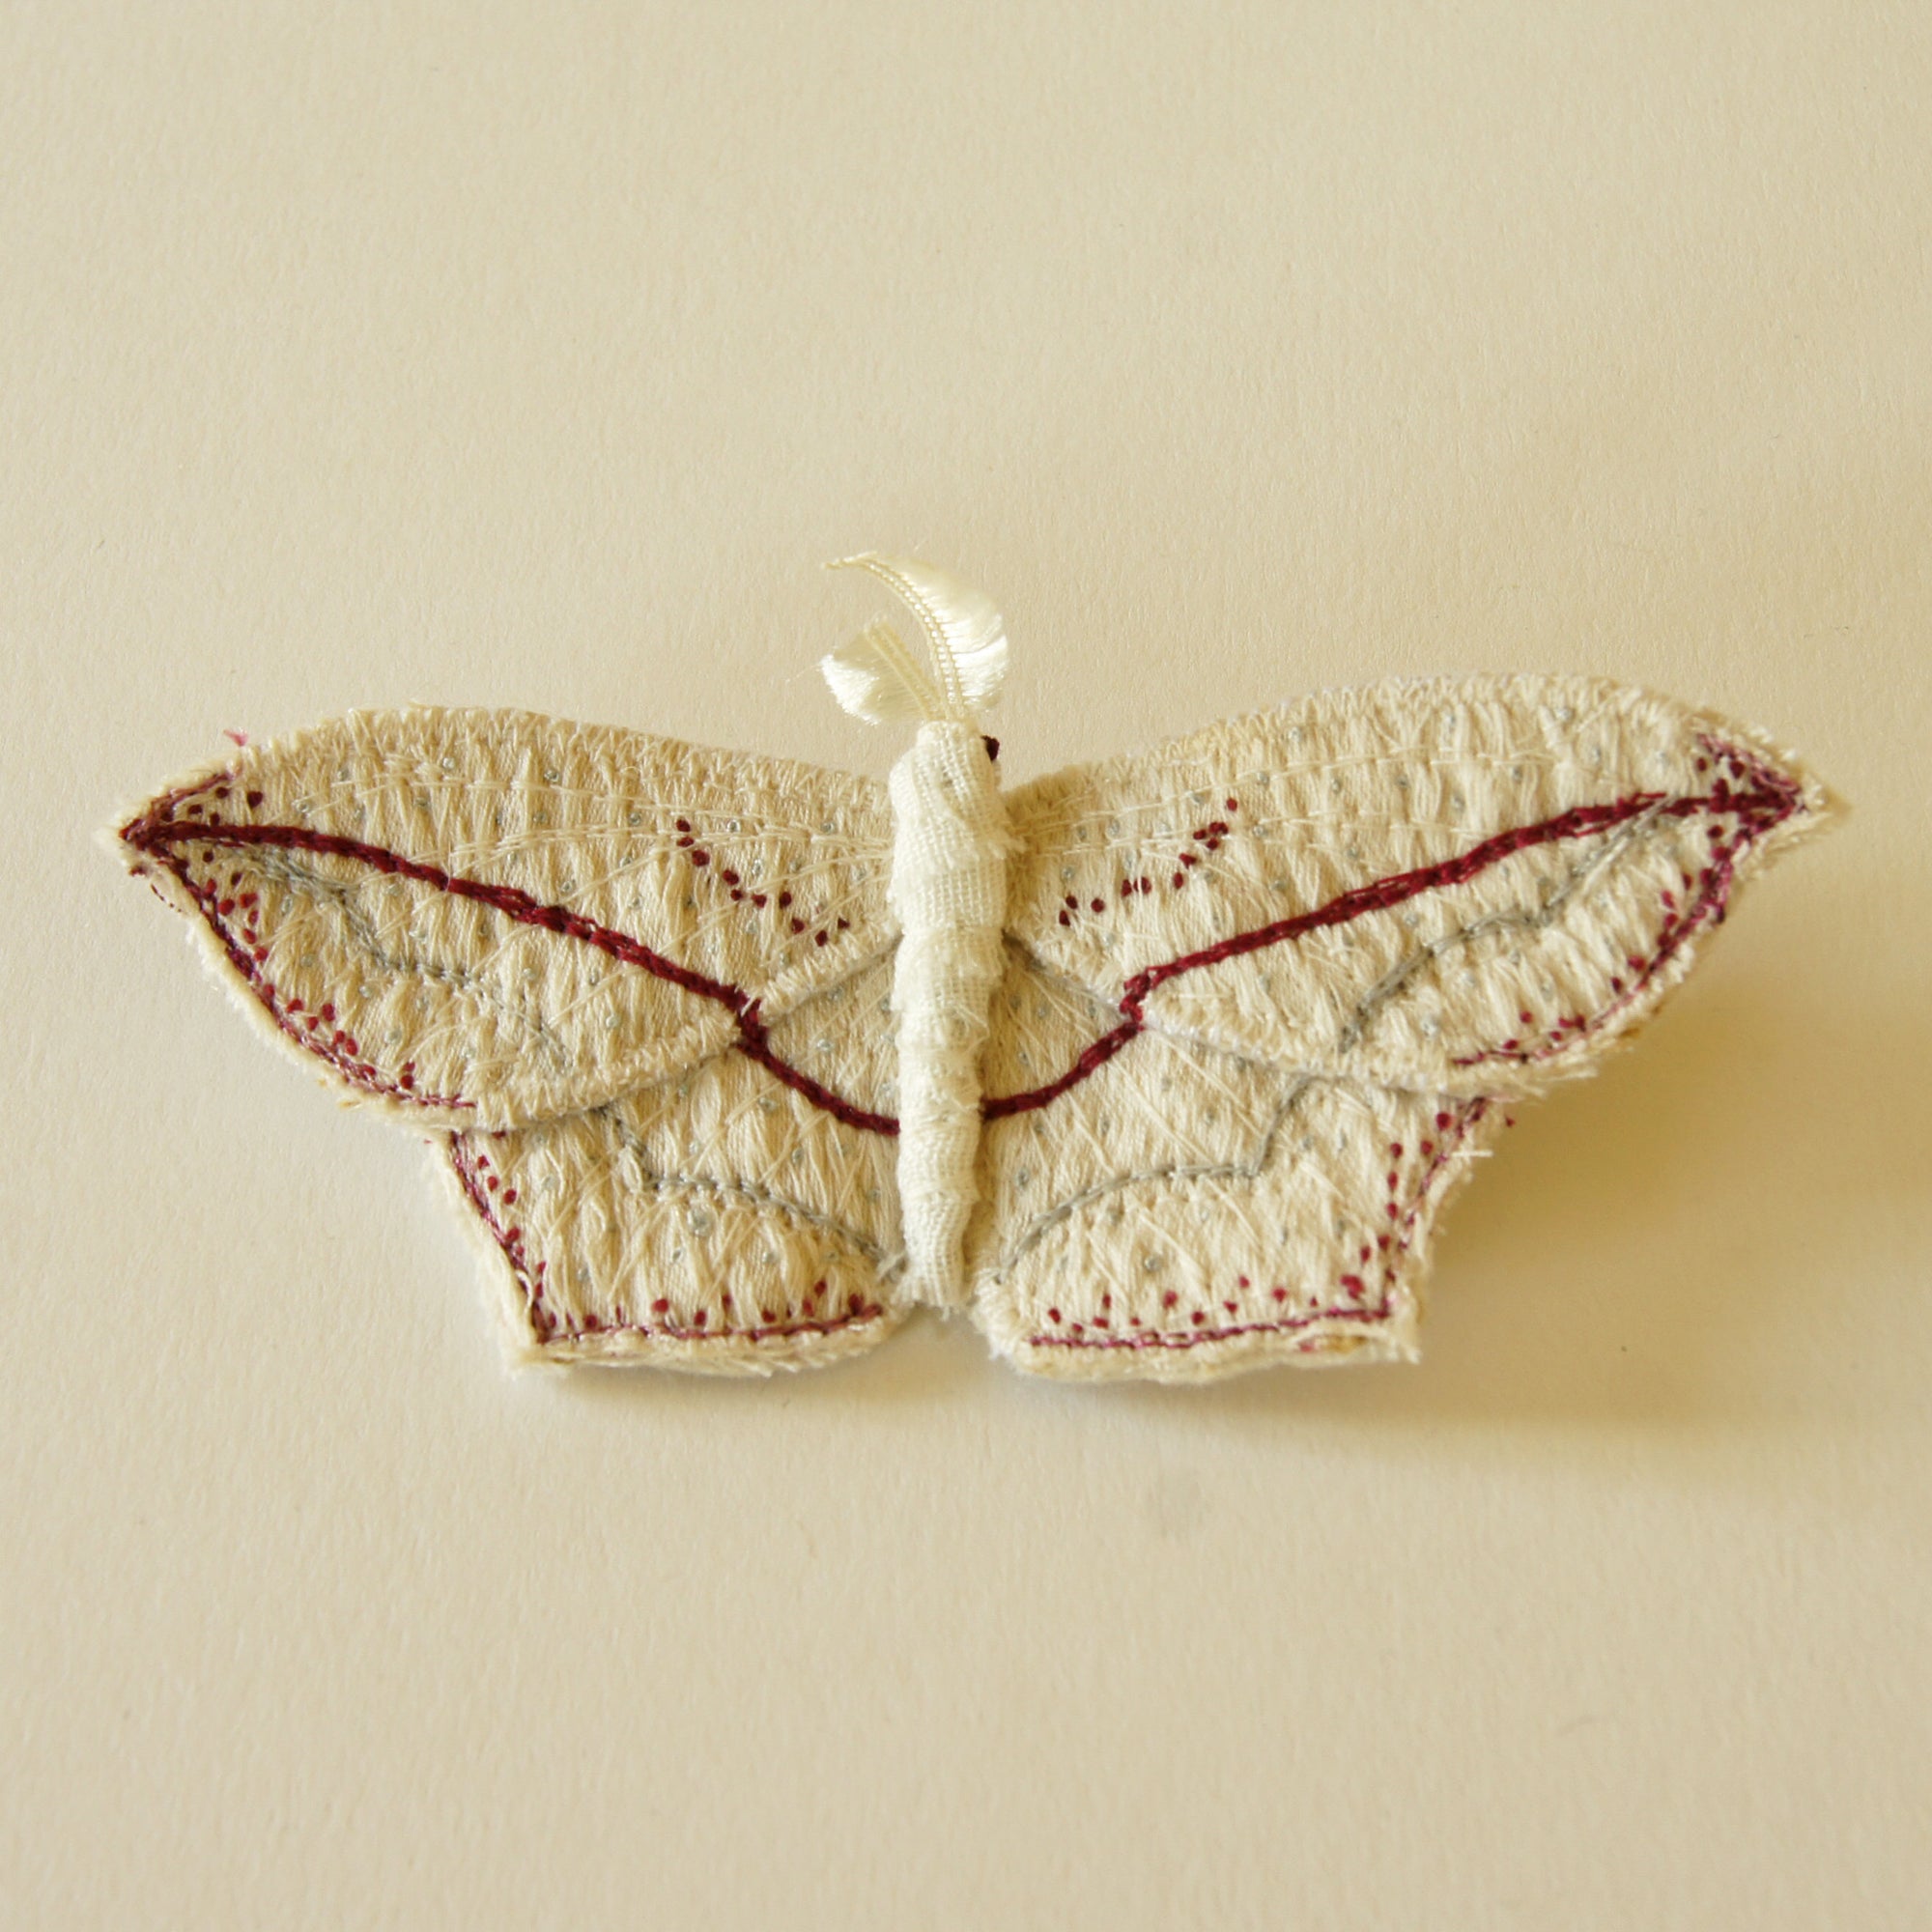 Blood Vein moth brooch